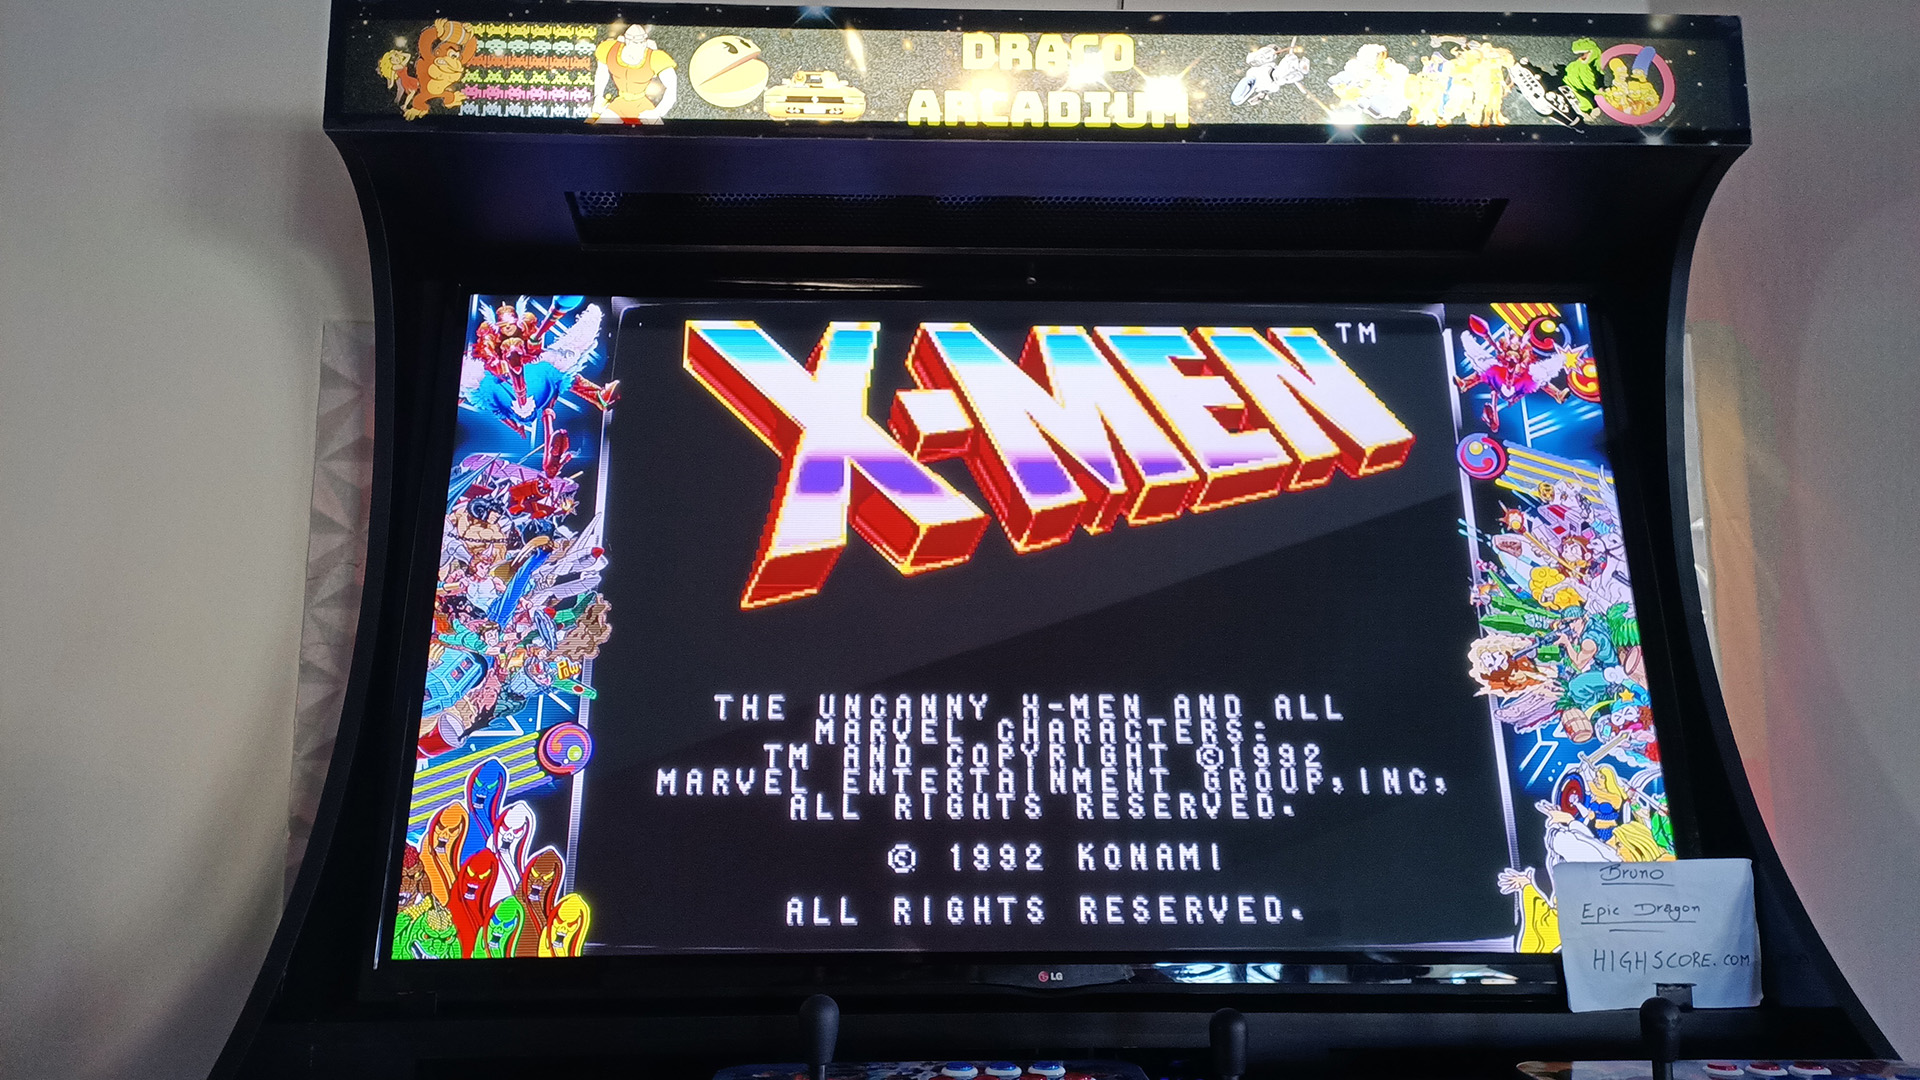 X-Men [xmen] 149 points